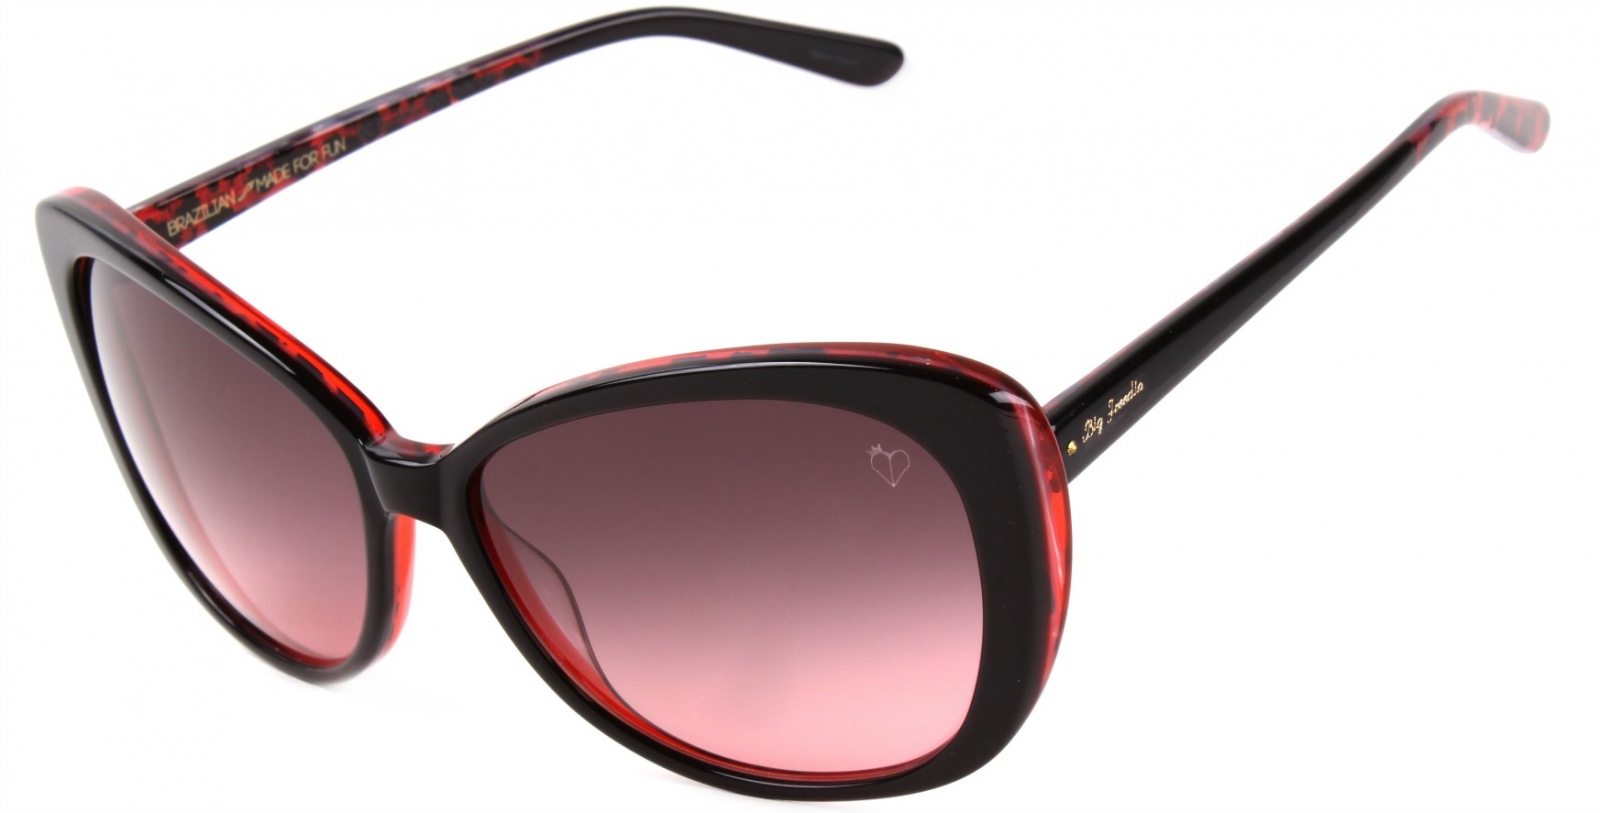 compras | moda | moda 2014 | acessórios | óculos de Sol | modelos de óculos da moda | óculos de Sol tendência 2014 | Big Freedia para Chilli Beans | Chilli Beans